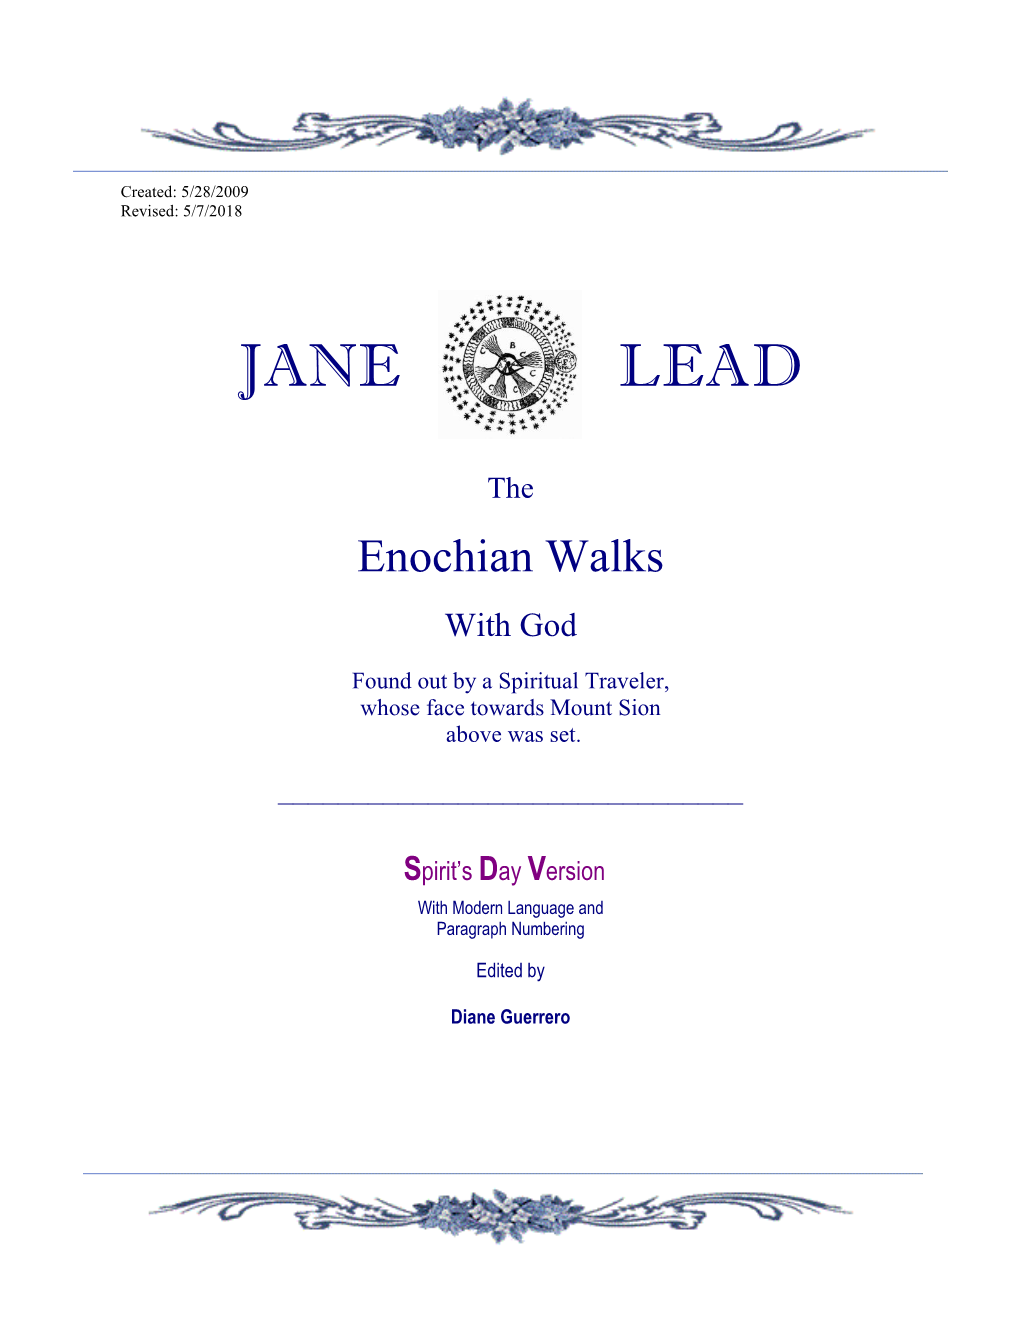 The Enochian Walks with God